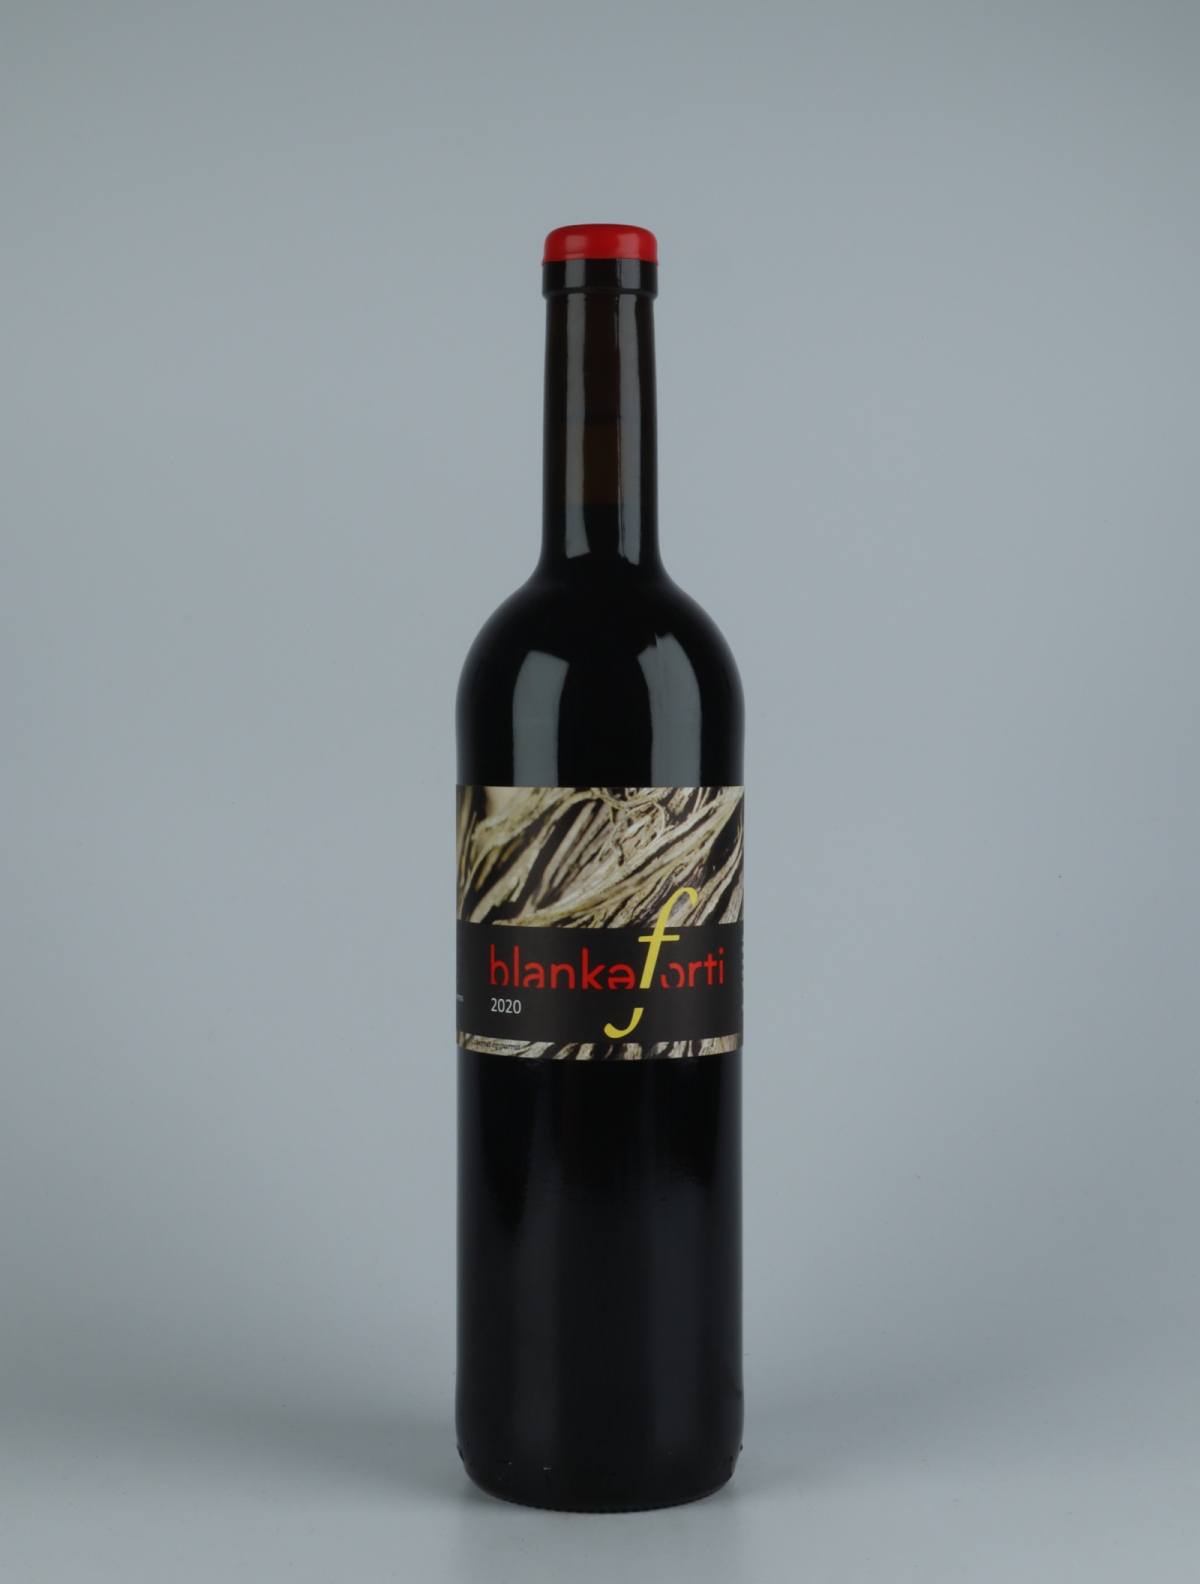 A bottle 2020 Blankaforti Red wine from Jordi Llorens, Catalonia in Spain